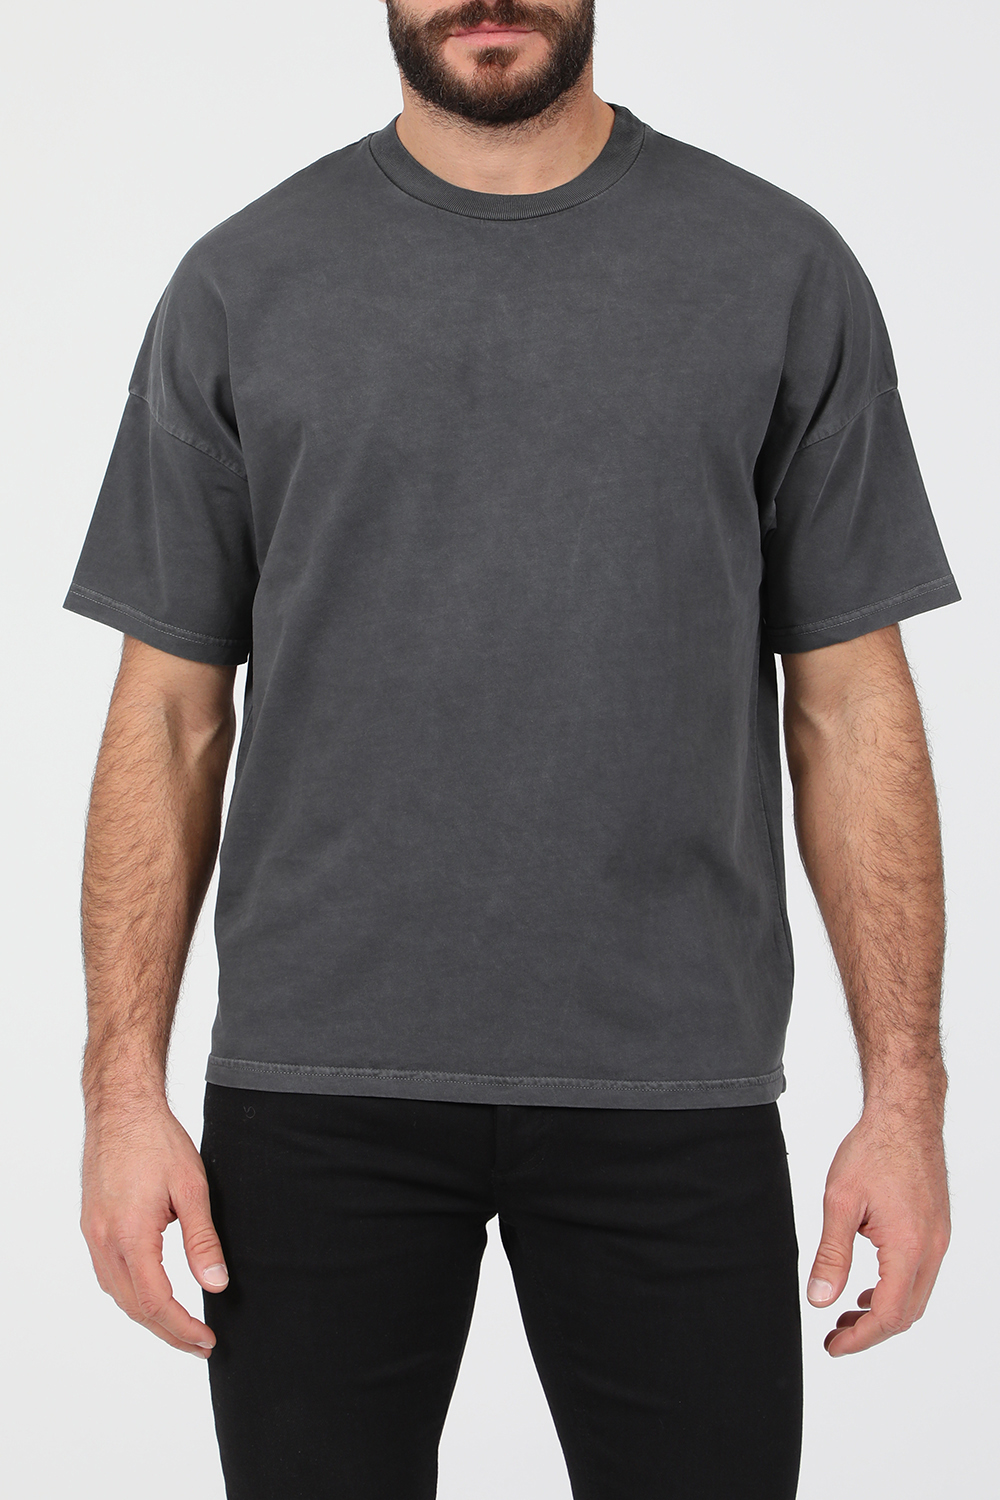 AMERICAN VINTAGE – Ανδρικο t-shirt AMERICAN VINTAGE ανθρακι